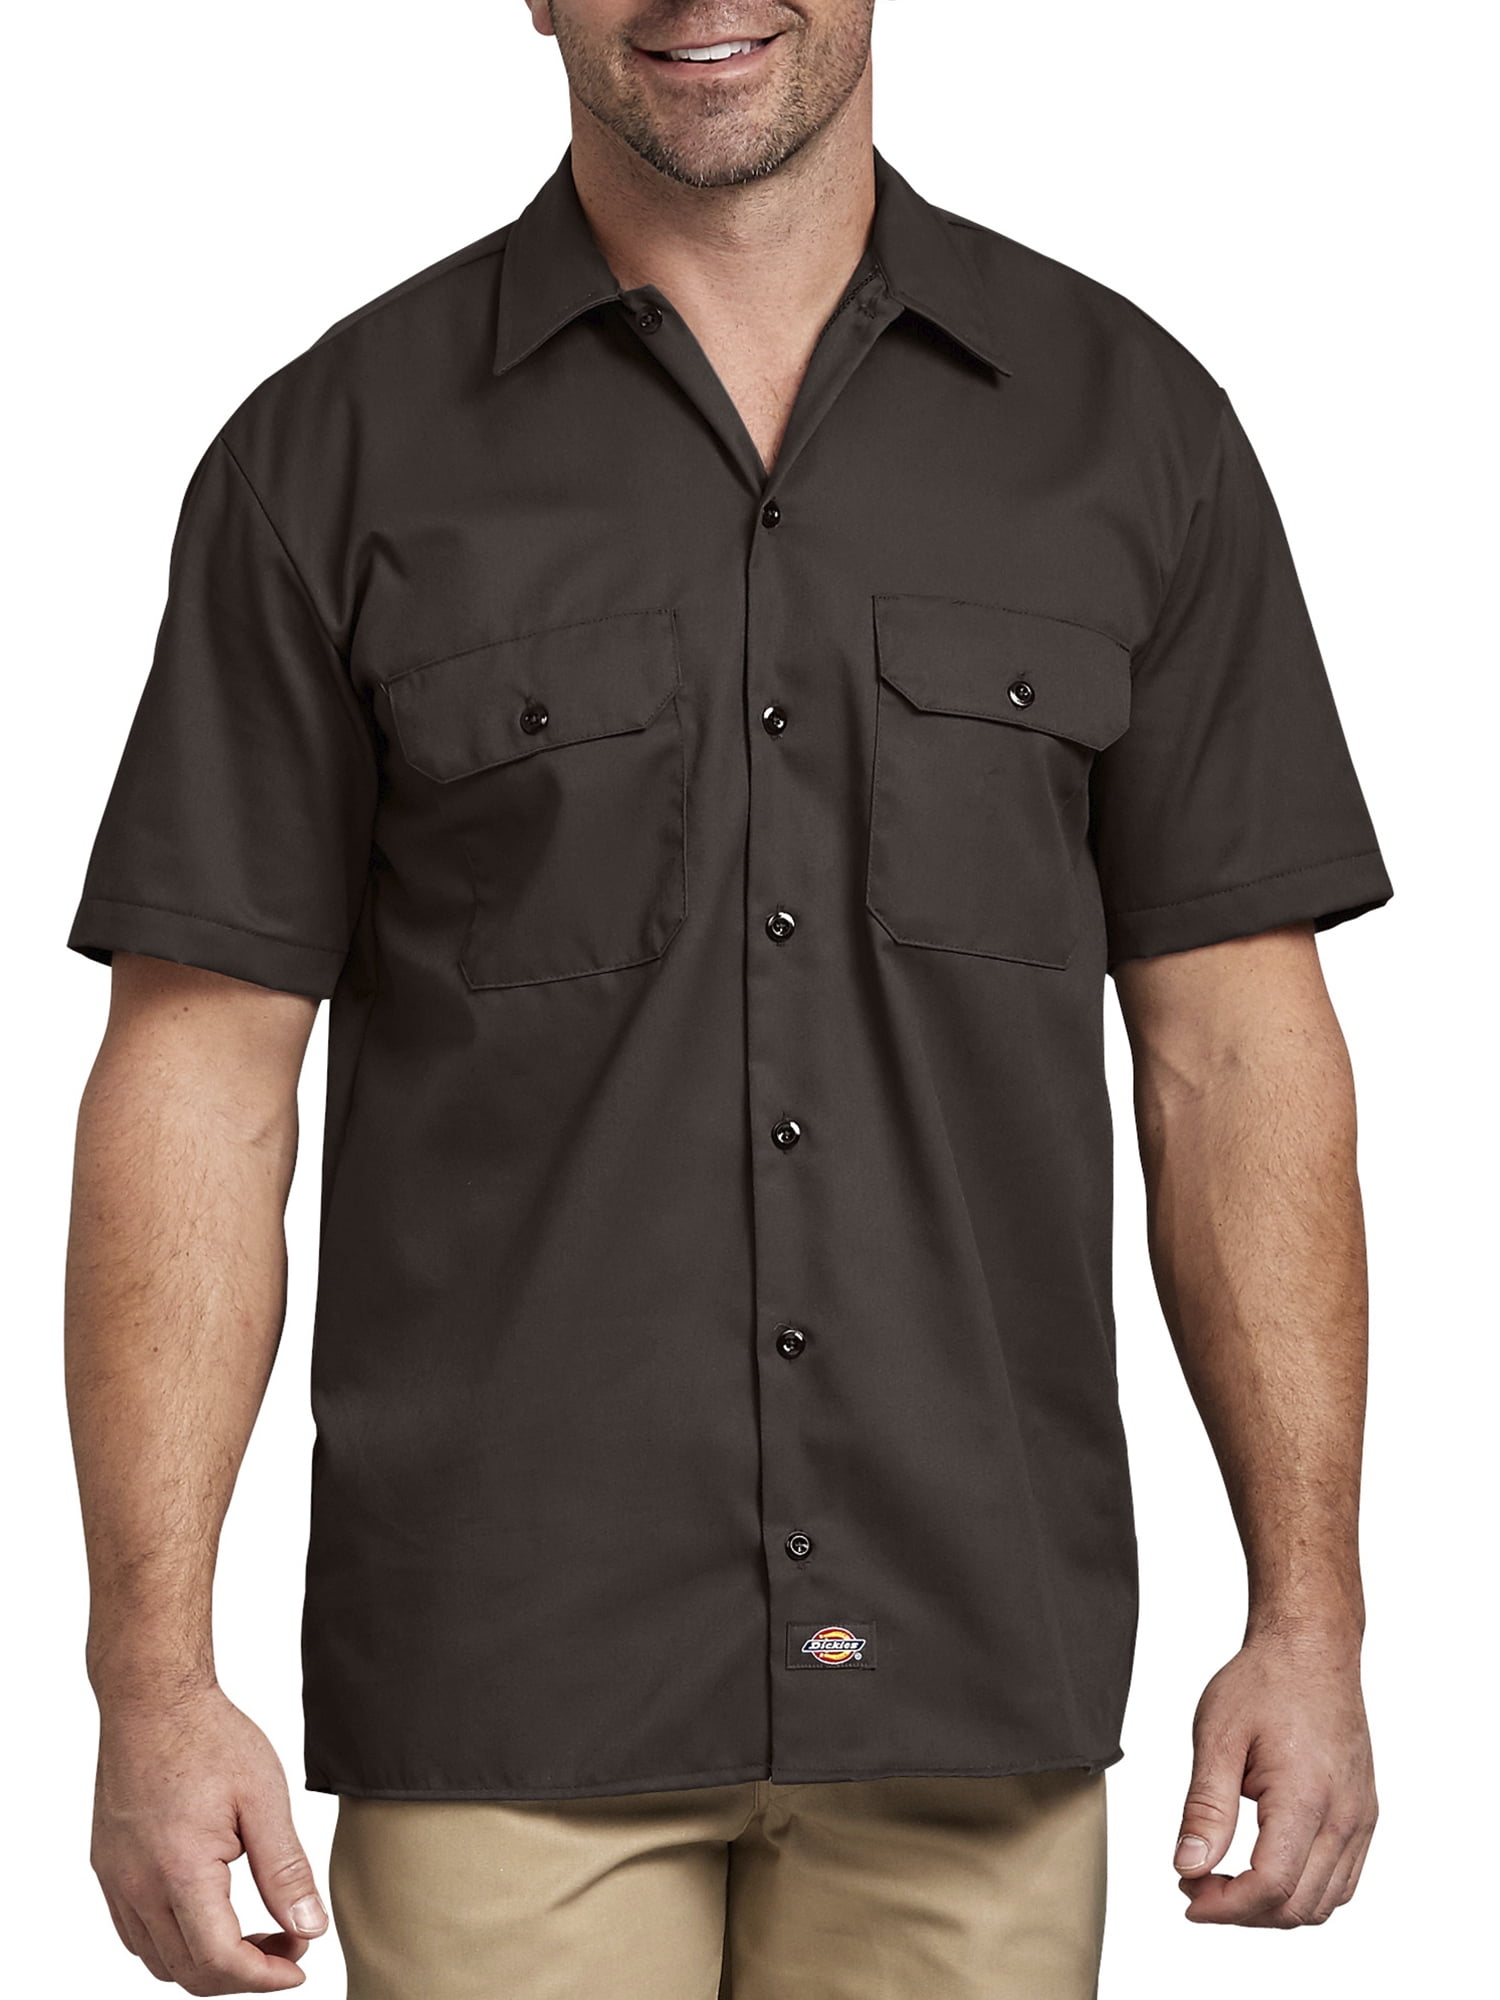 Dickies Men's NEW Size S-5XL Pocket Short Sleeve Industrial Work Shirt ls535 